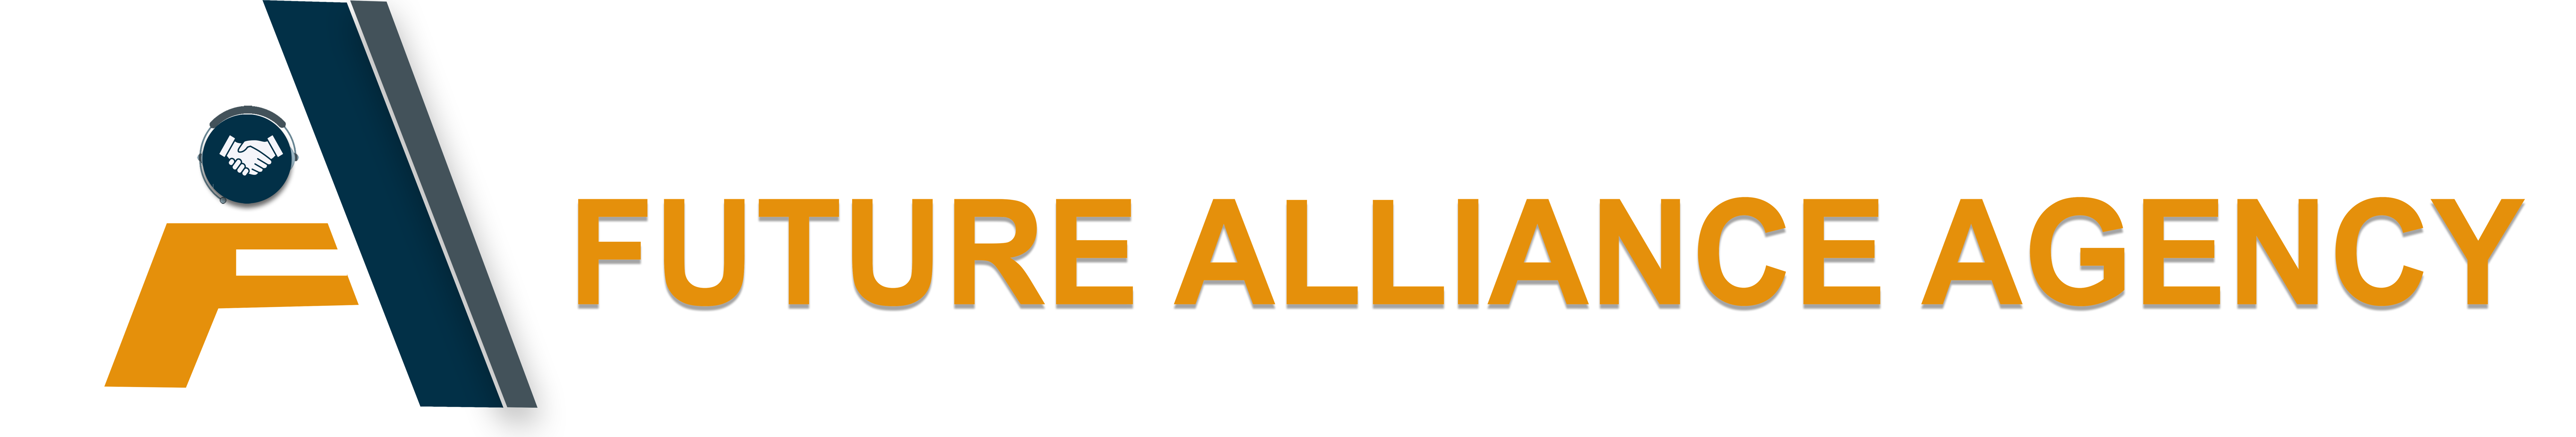 Future Alliance Agency